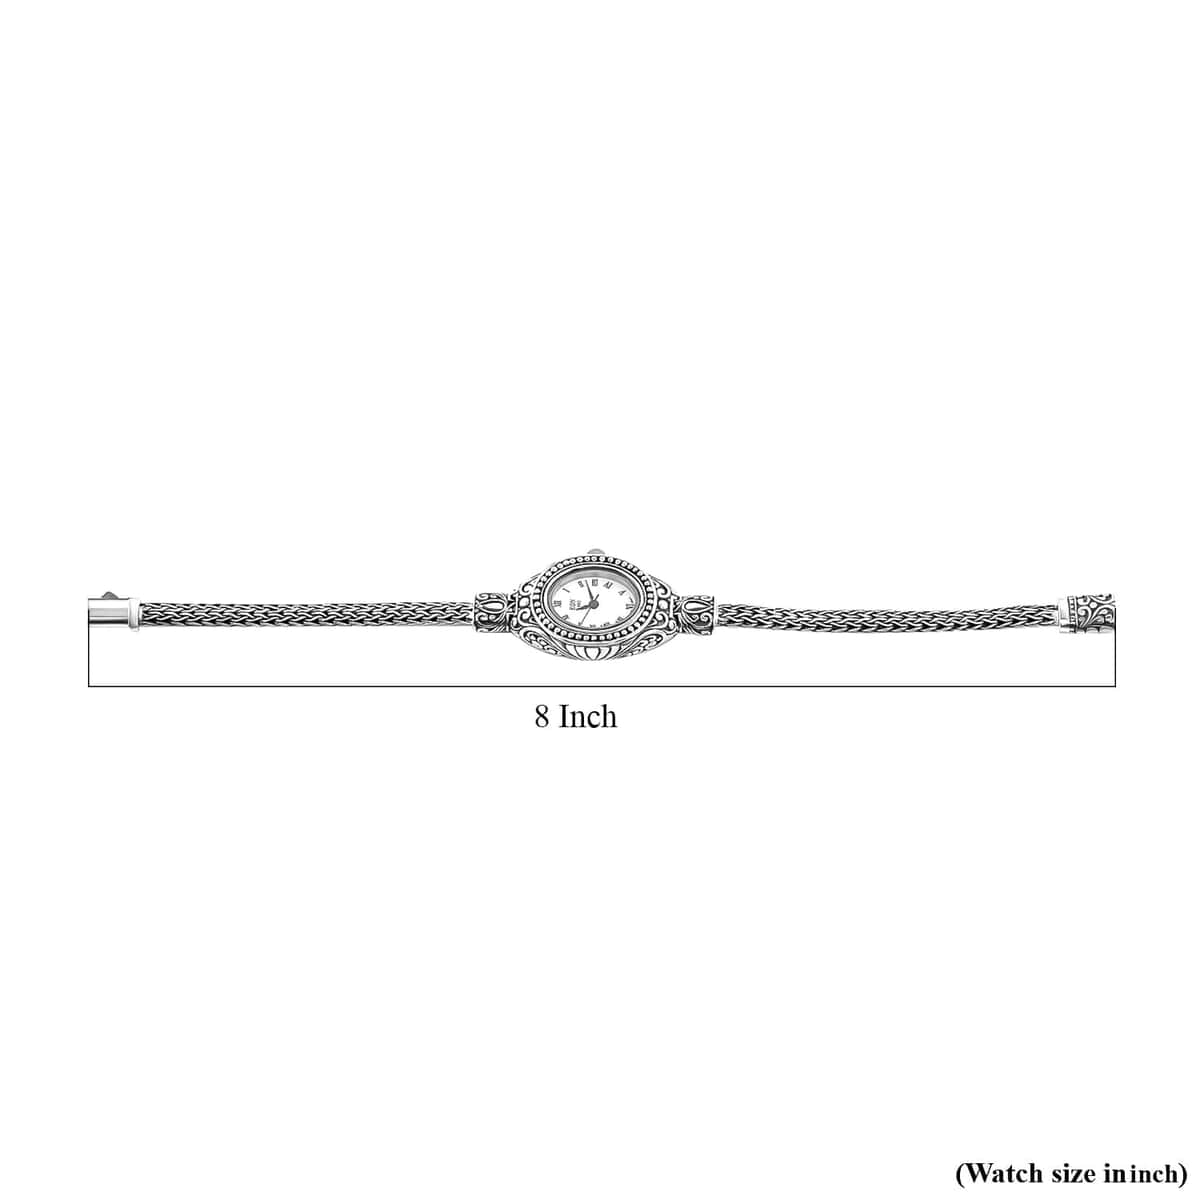 Bali Legacy Eon 1962 Swiss Movement Sterling Silver Tulang Naga Bracelet Watch (8 in), Designer Bracelet Watch, Analog Luxury Wristwatch image number 7